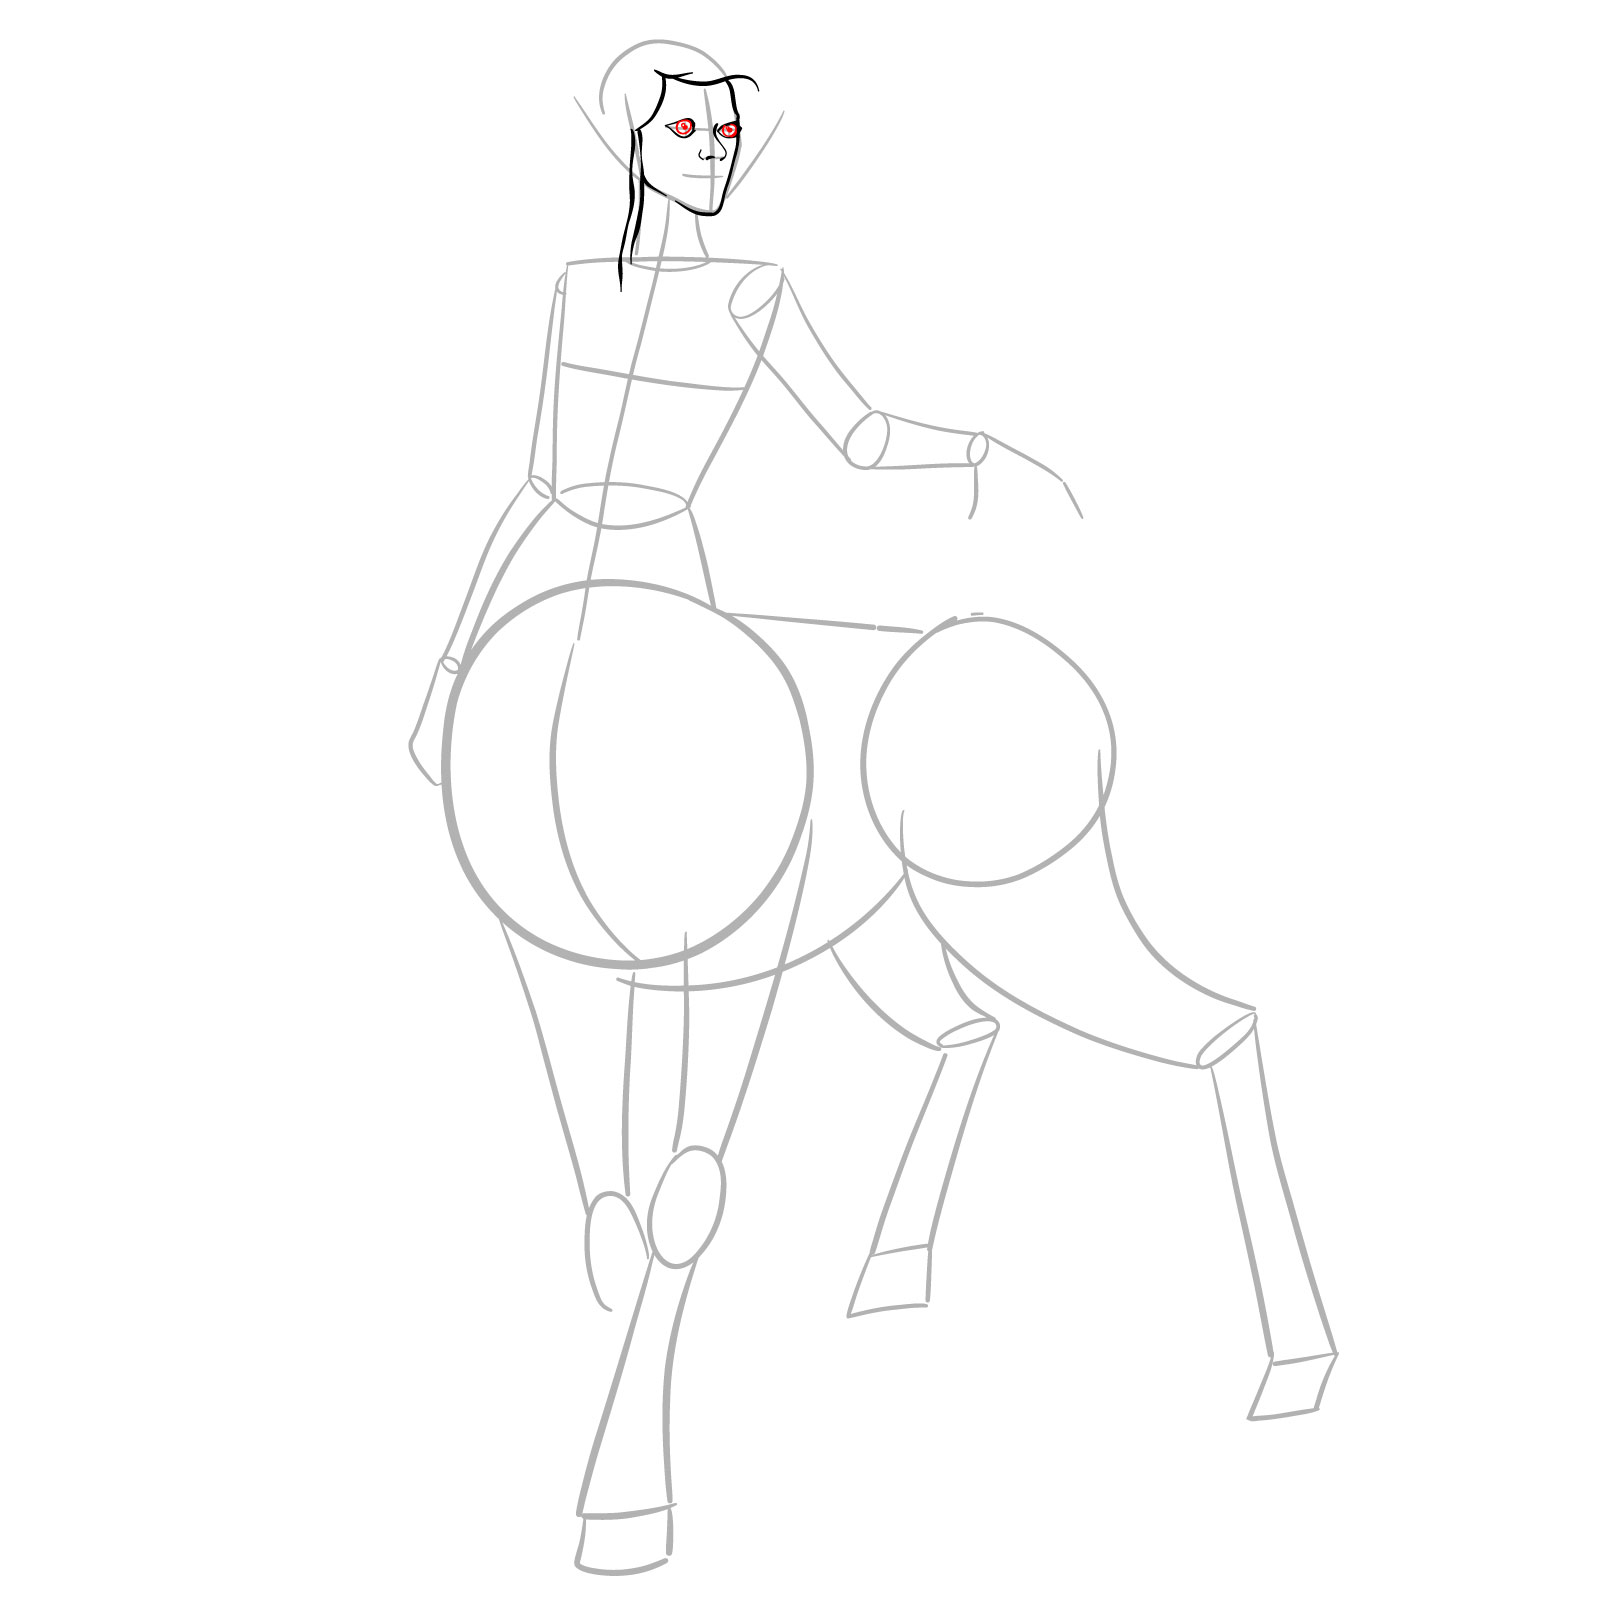 How to draw a Female Centaur - step 09